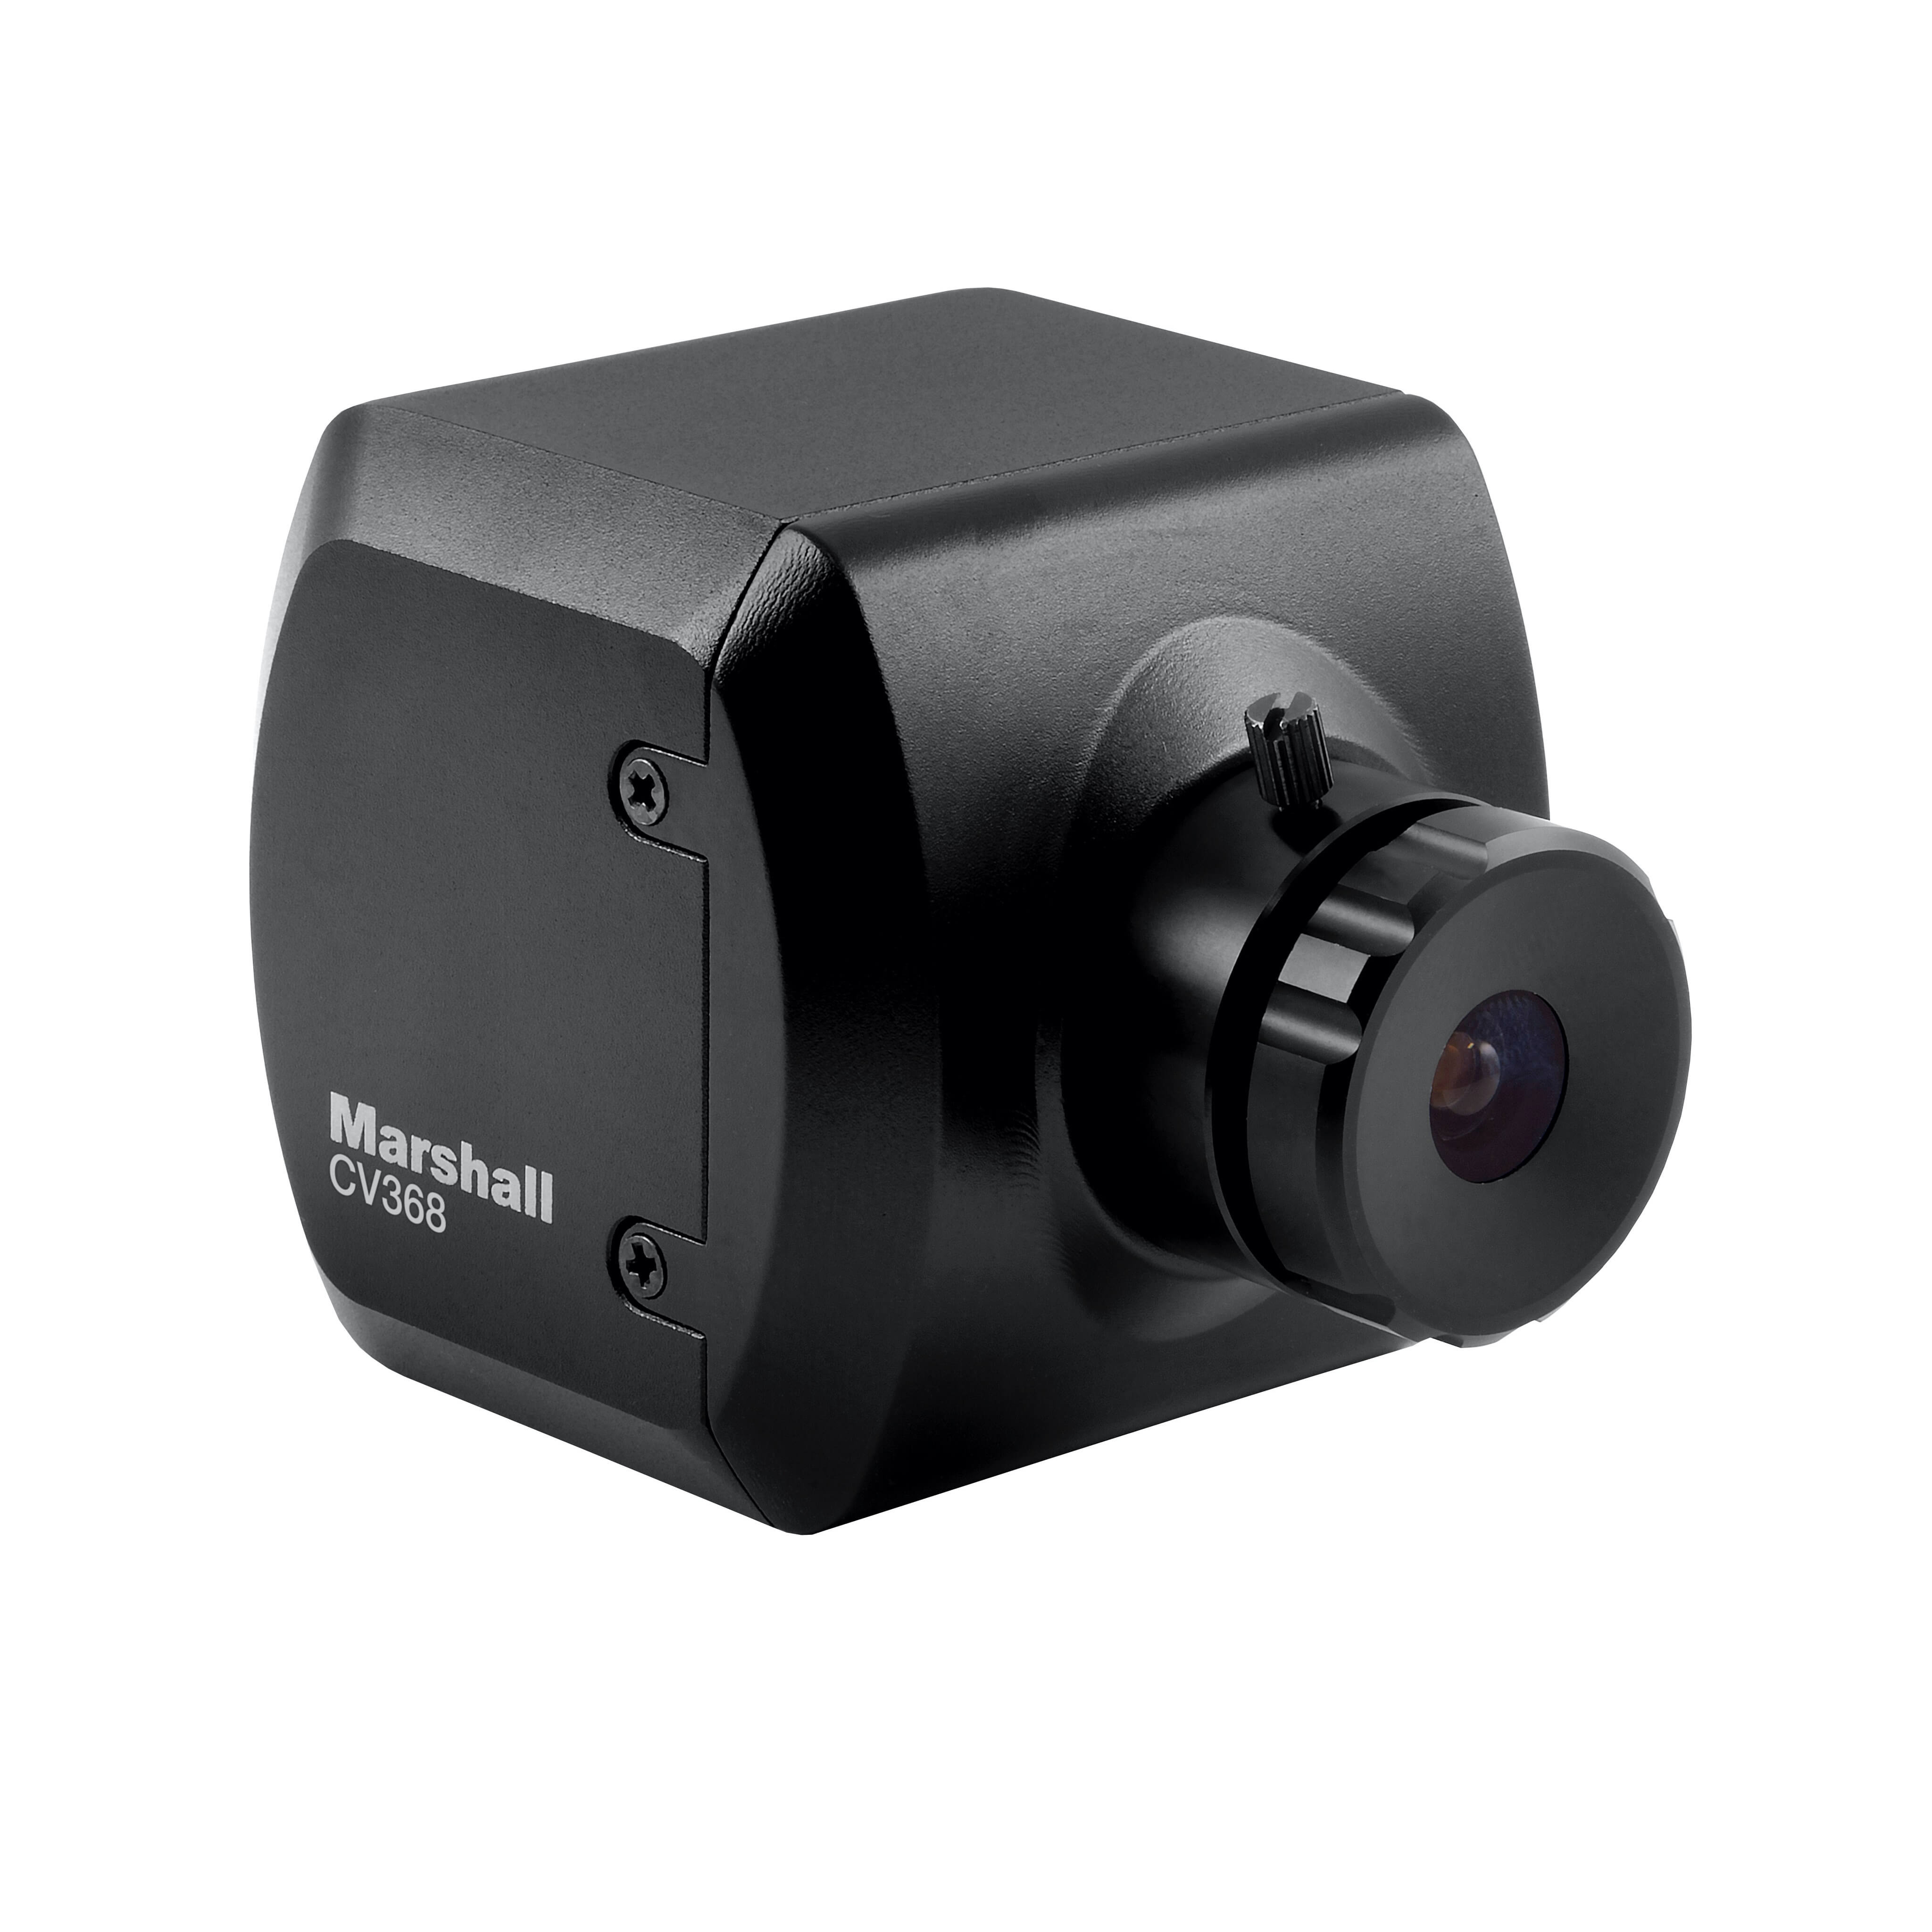 Marshall CV368 - Compact Global HD Camera with Genlock 3G-SDI and HDMI, angled right